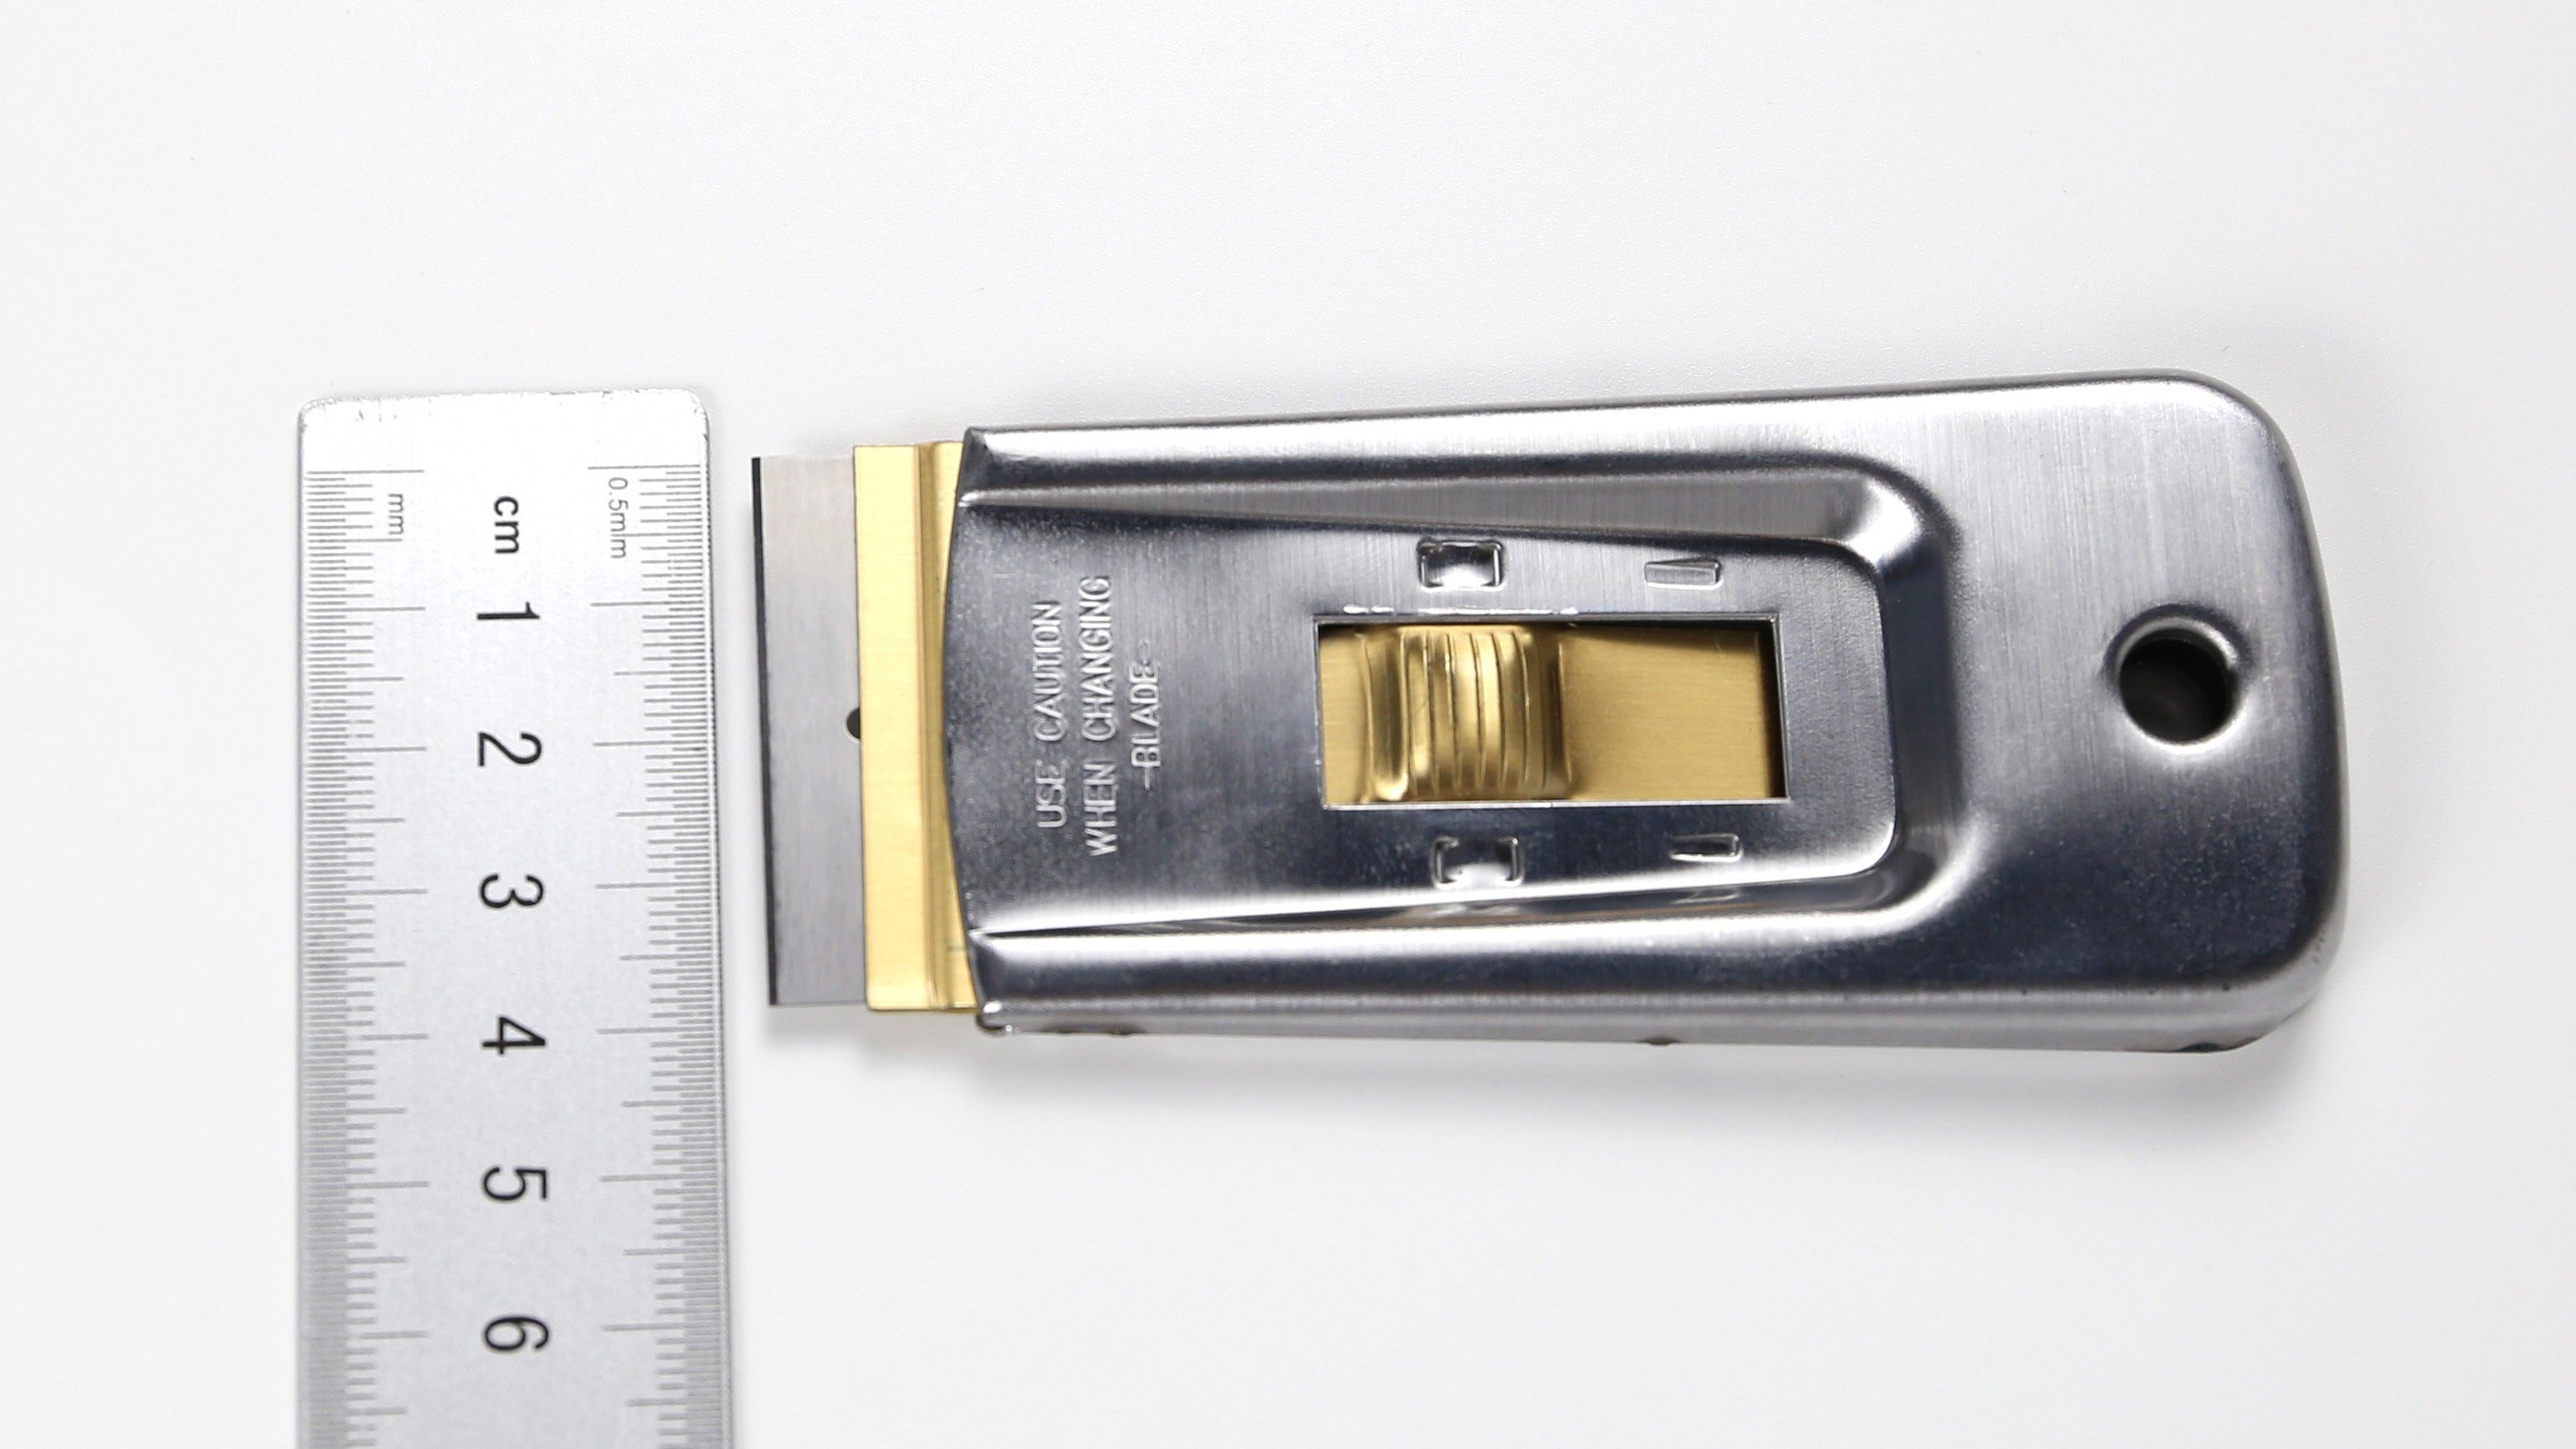 1.5 in. standard single edge razor blade retracts for safe storage